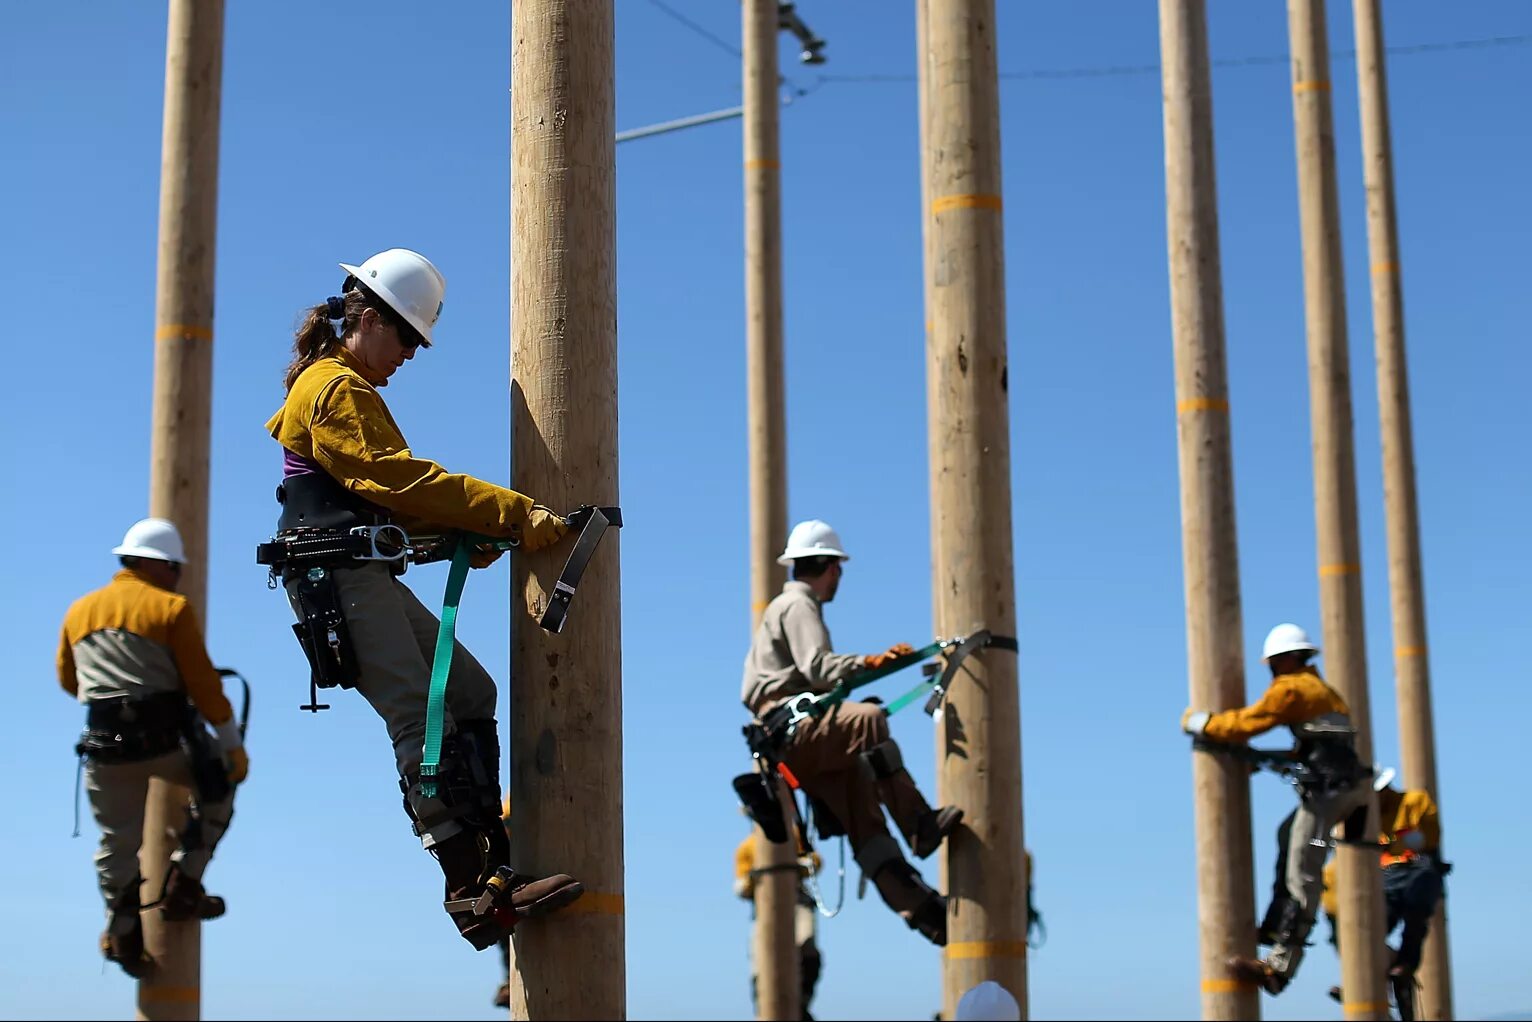 More poles. Utility worker. Pole Climbing. Картинки IMAGEUTILITIES. Картинка Employability skills.